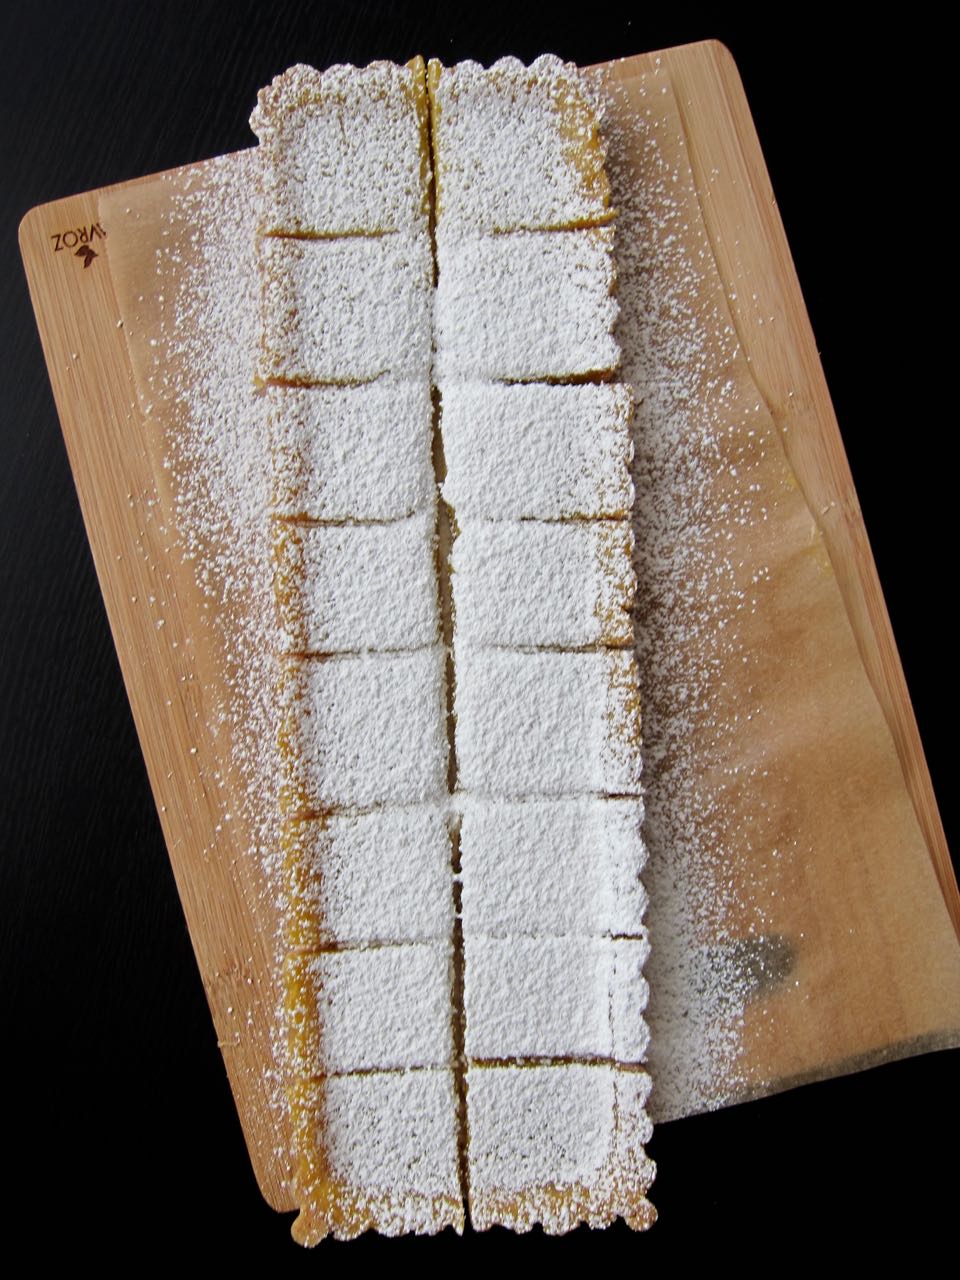 lemon tart squares dusted in powdered sugar.jpg